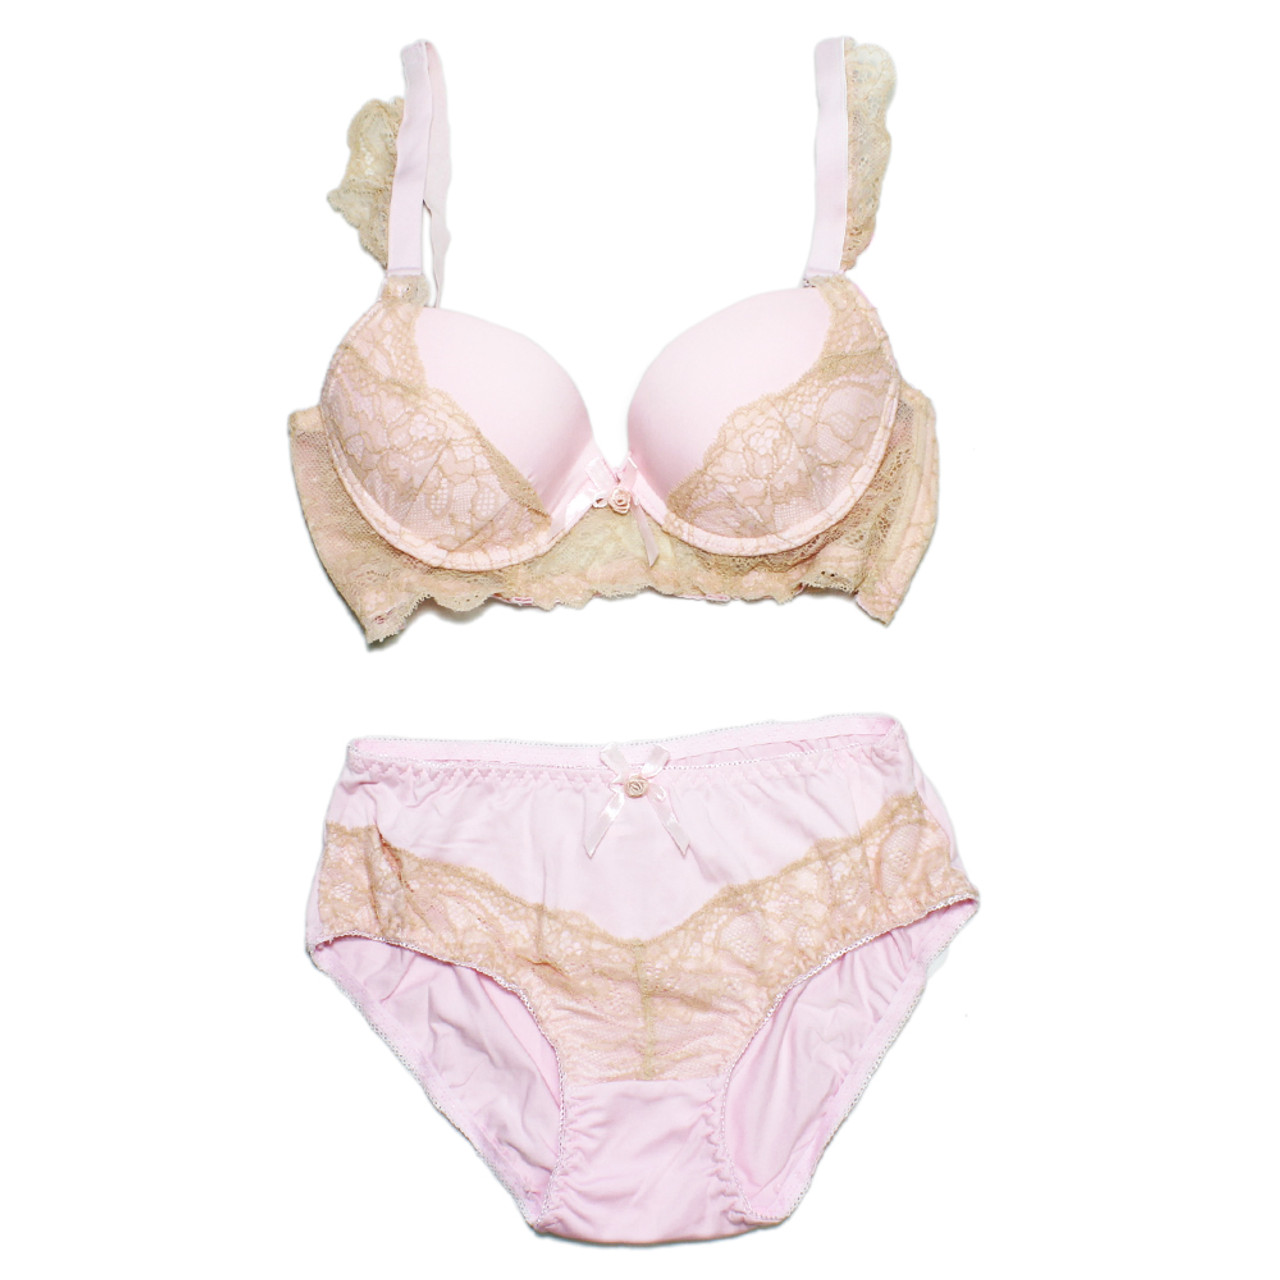 Wholesale delicates brand bras For Supportive Underwear 